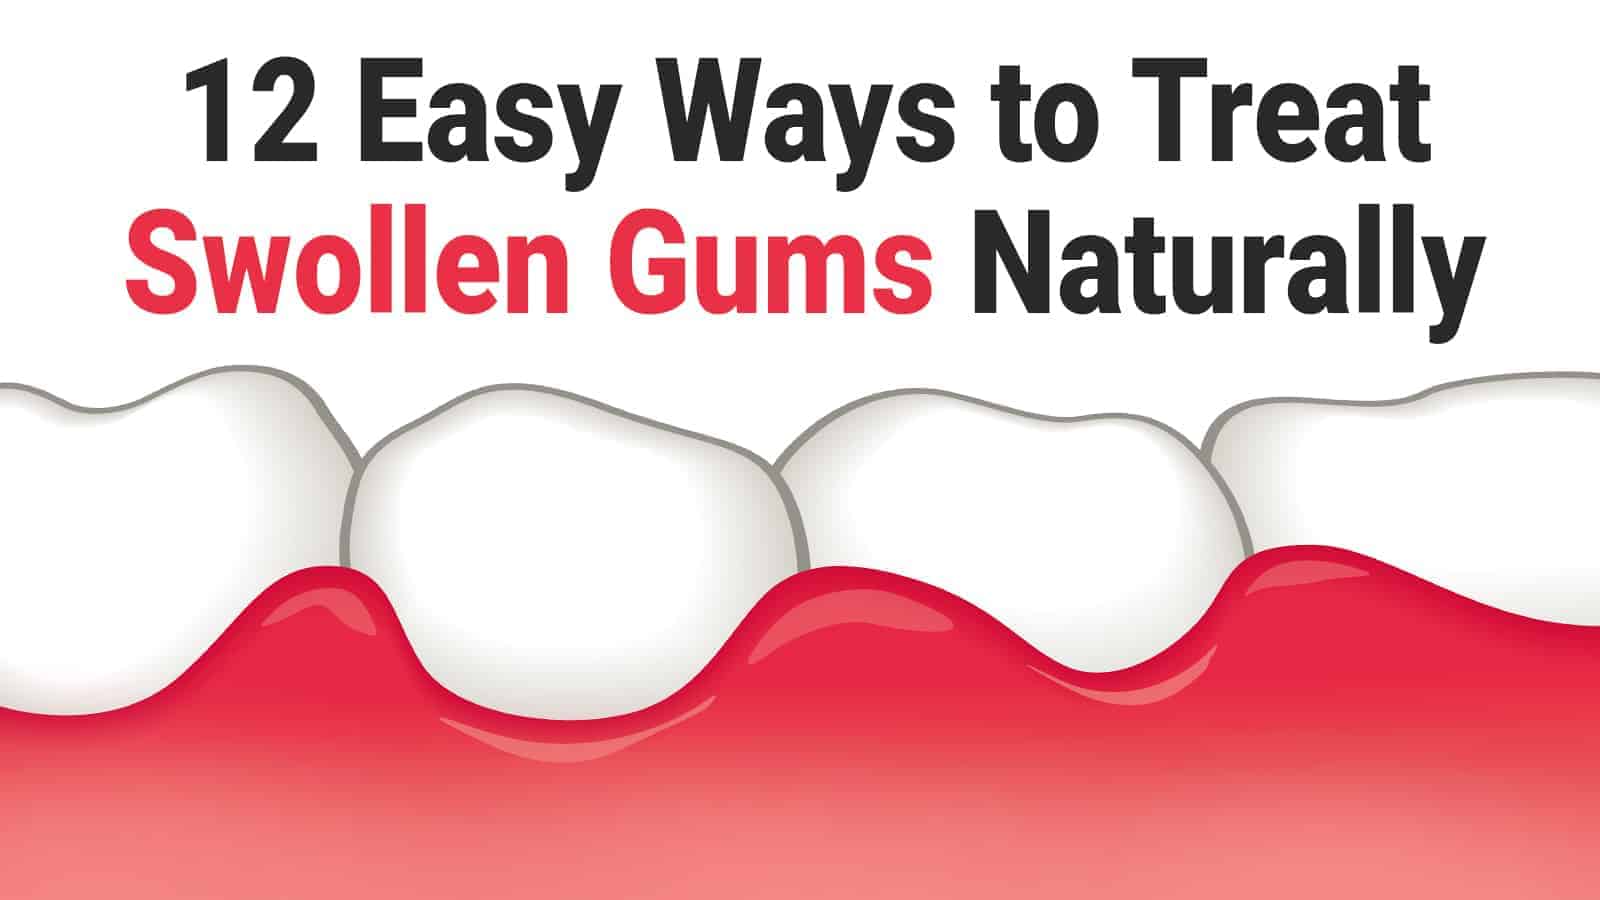 12 Easy Ways to Treat Swollen Gums Naturally